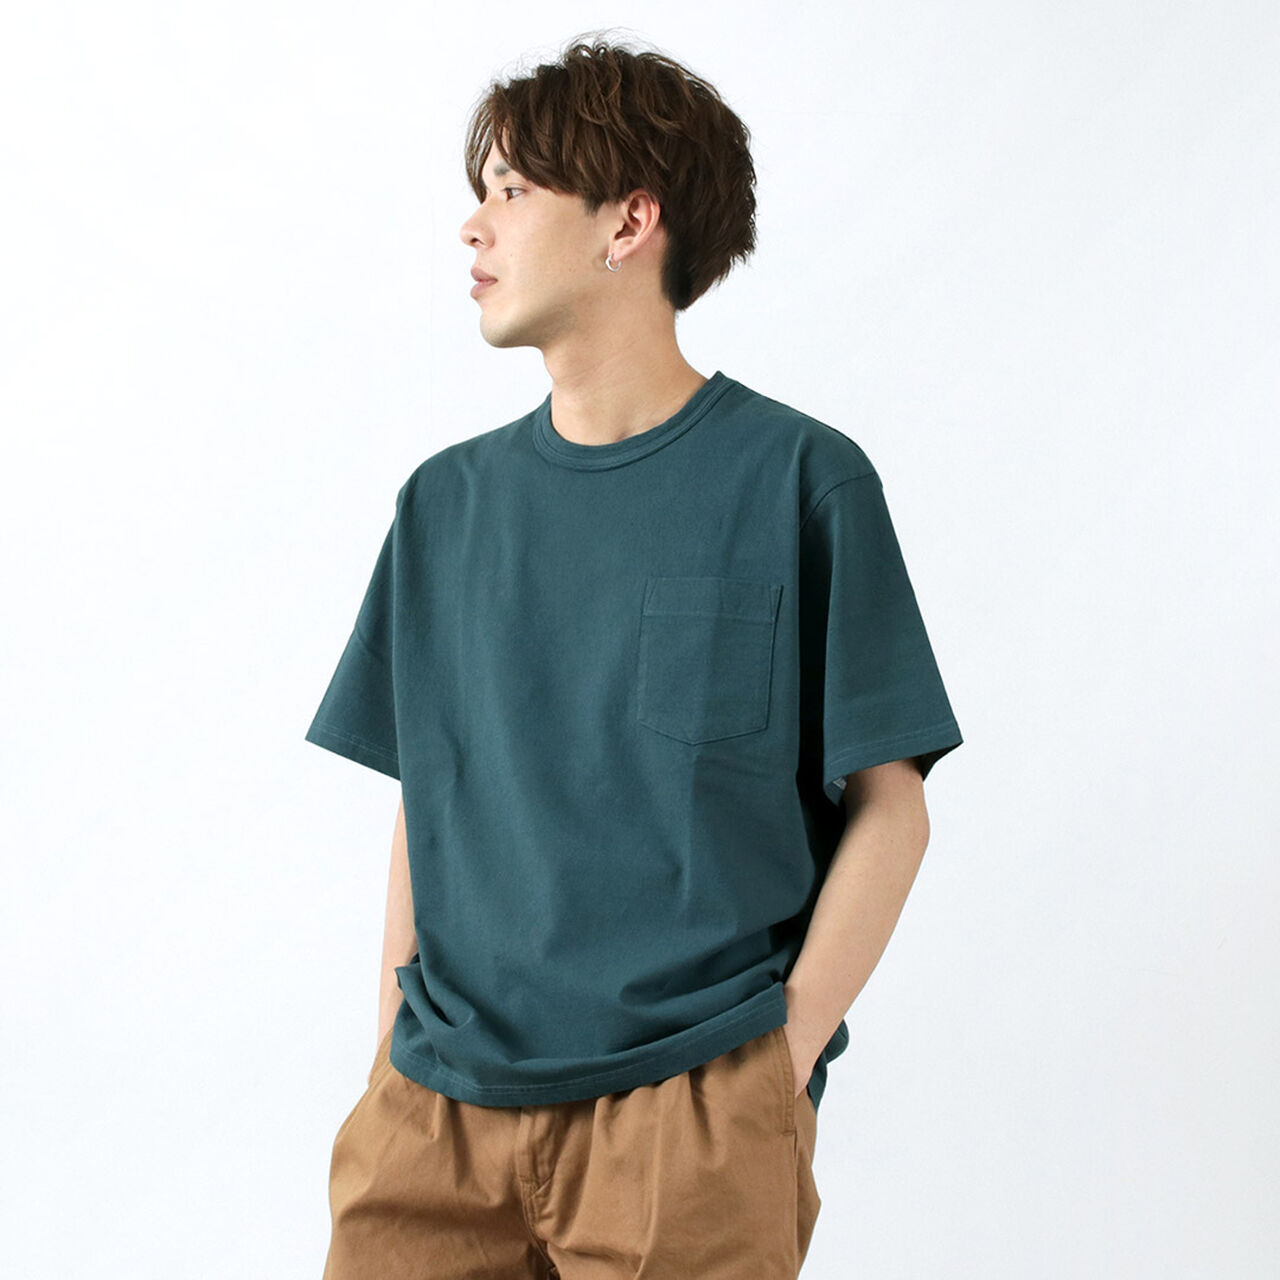 Tough Neck Short Sleeve T-Shirt,Green, large image number 0